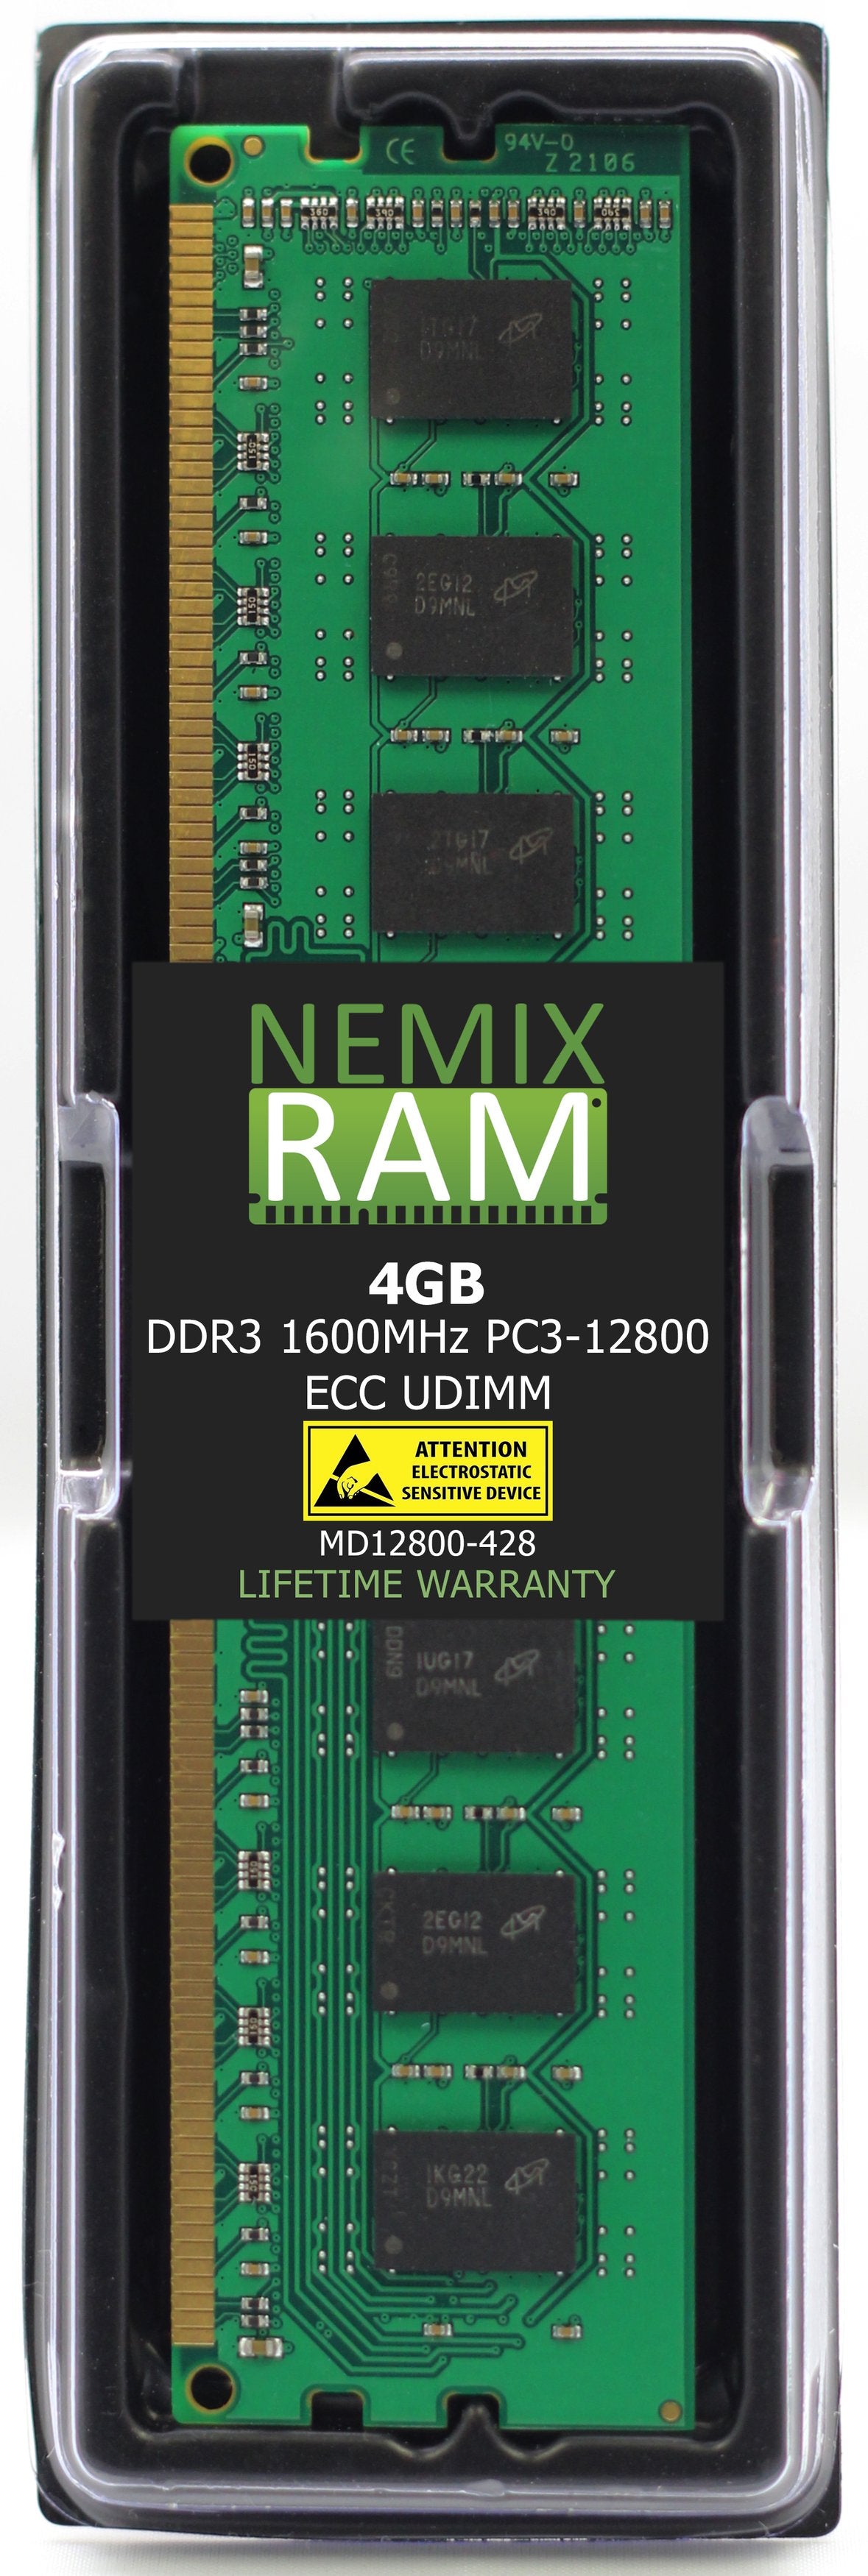 NEMIX RAM Memory Upgrade equivalent to ASUSTOR AS7R-RAM4G UDIMM Memory Module